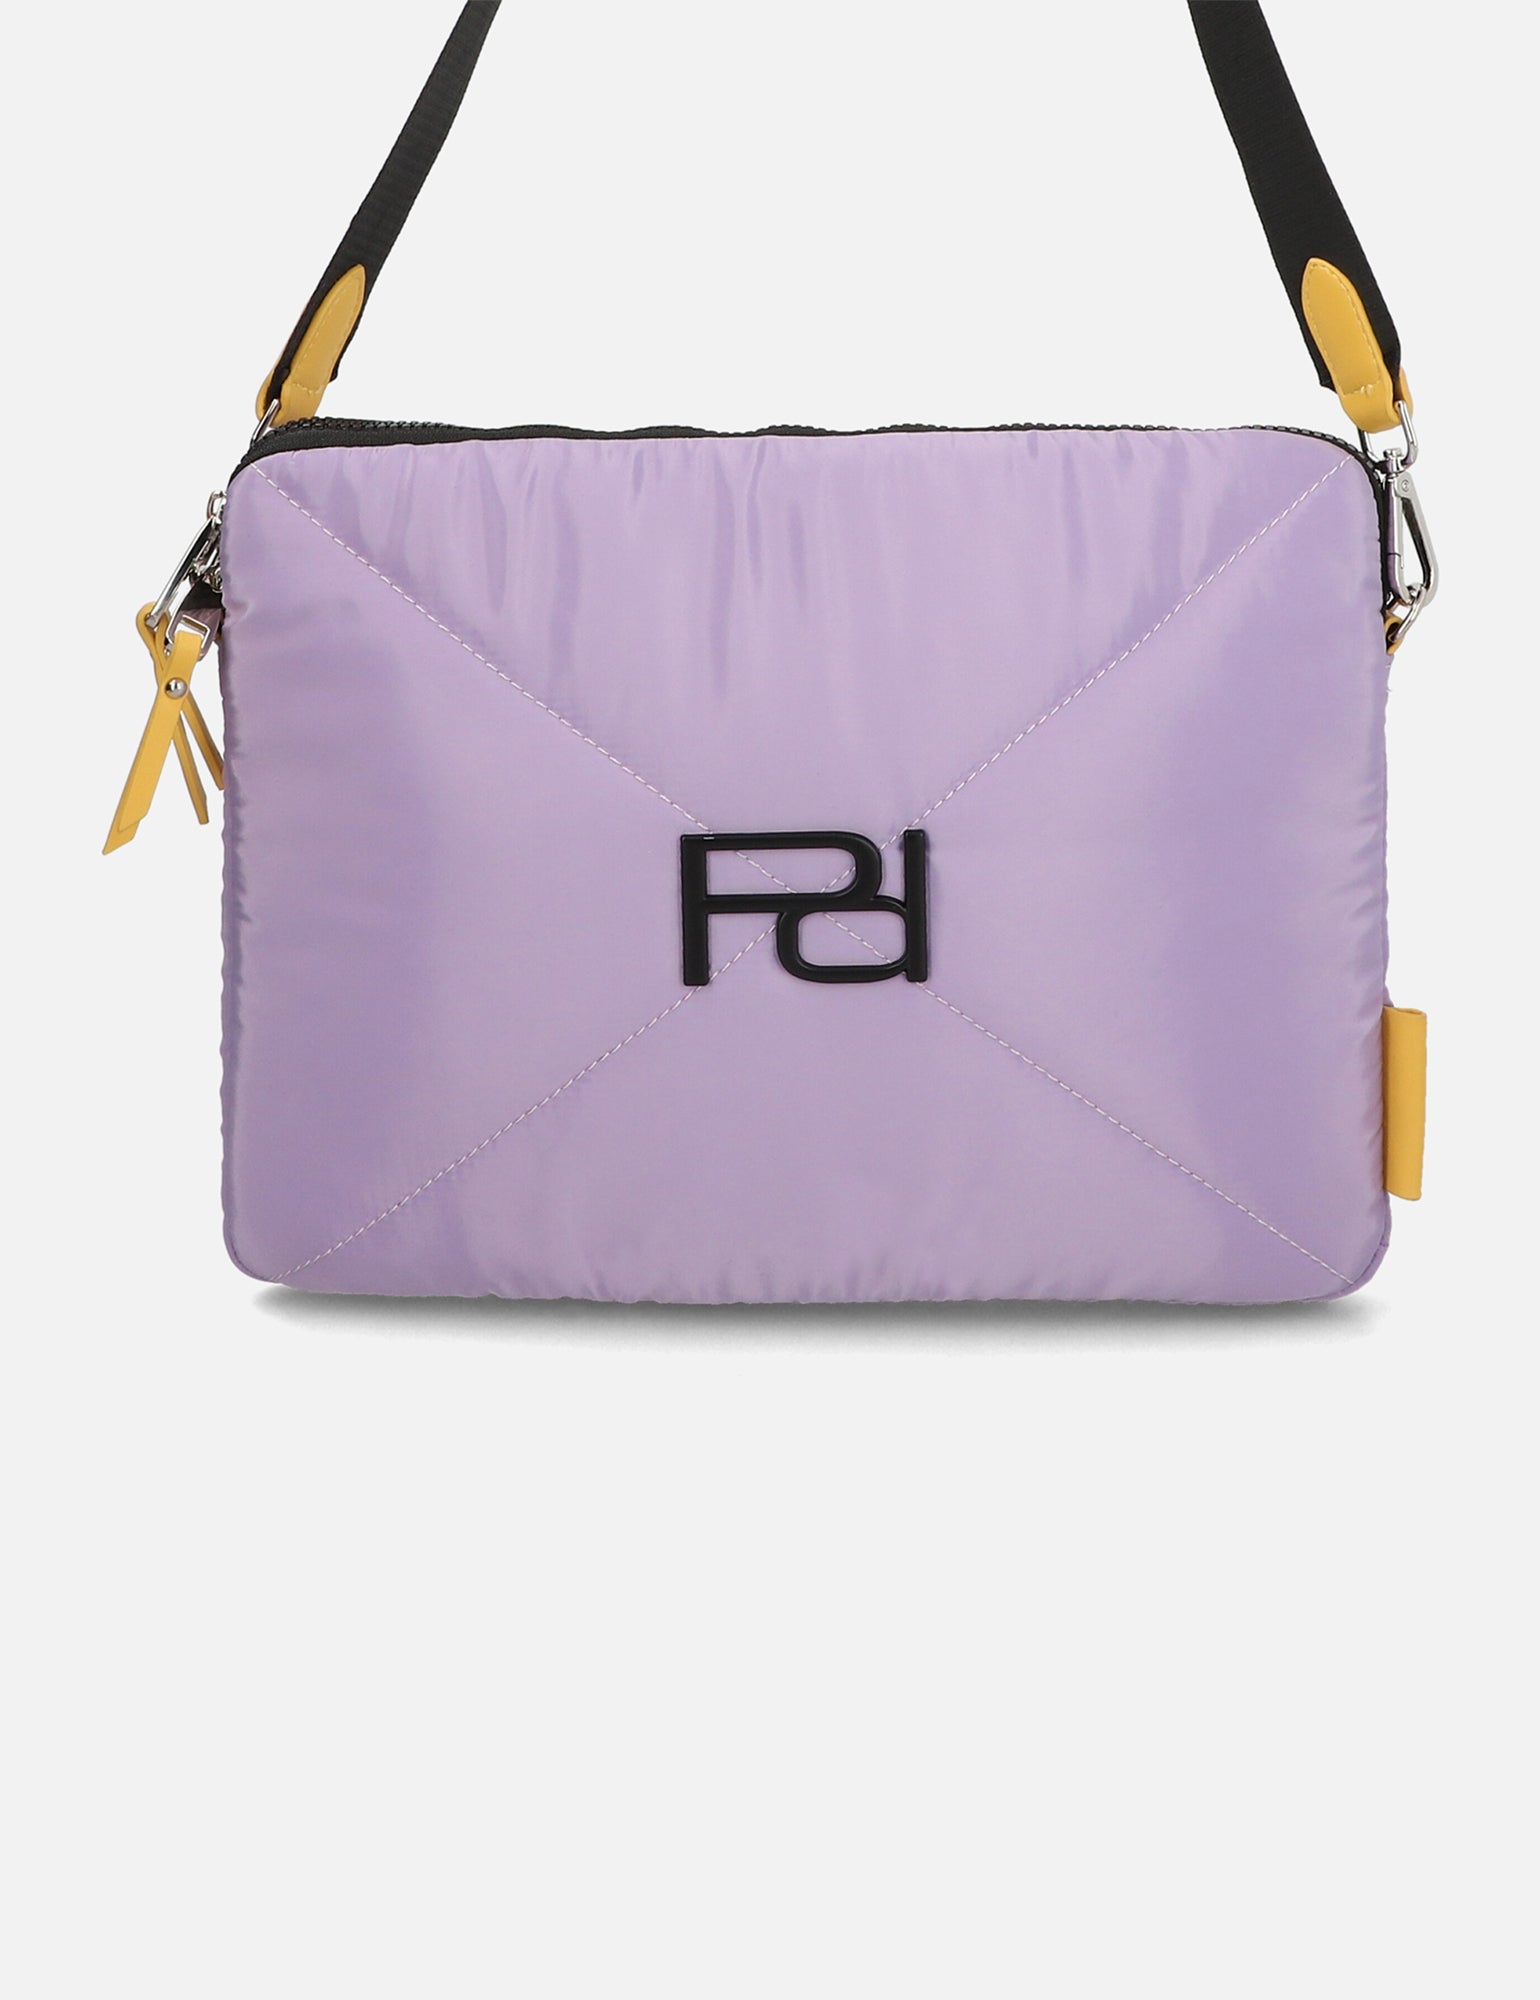 Porta laptop bandolera en nylon capitonado color lila